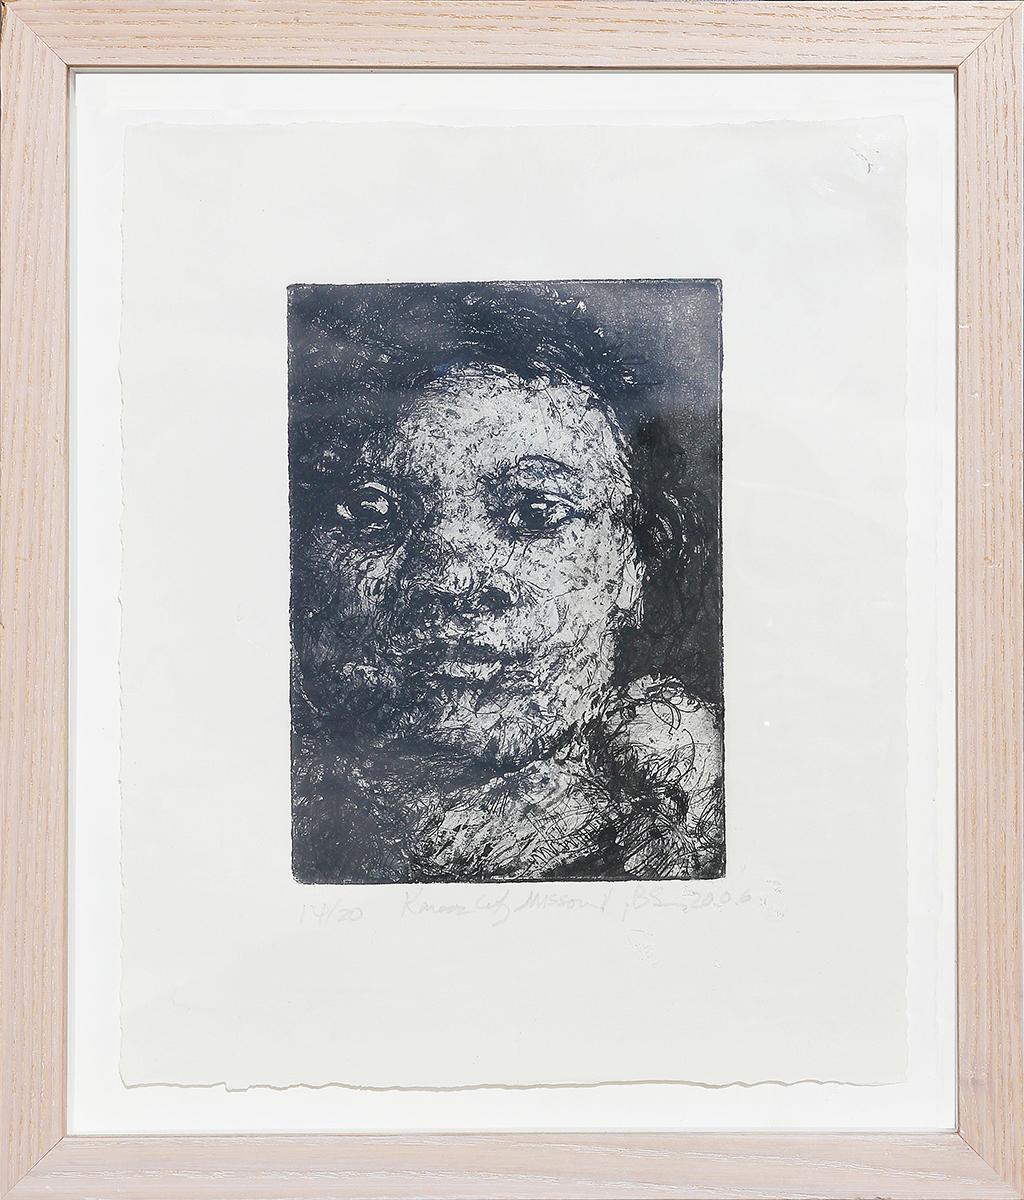 Beth Secor Portrait Print - Black and White Figurative Print of a Woman 14/20